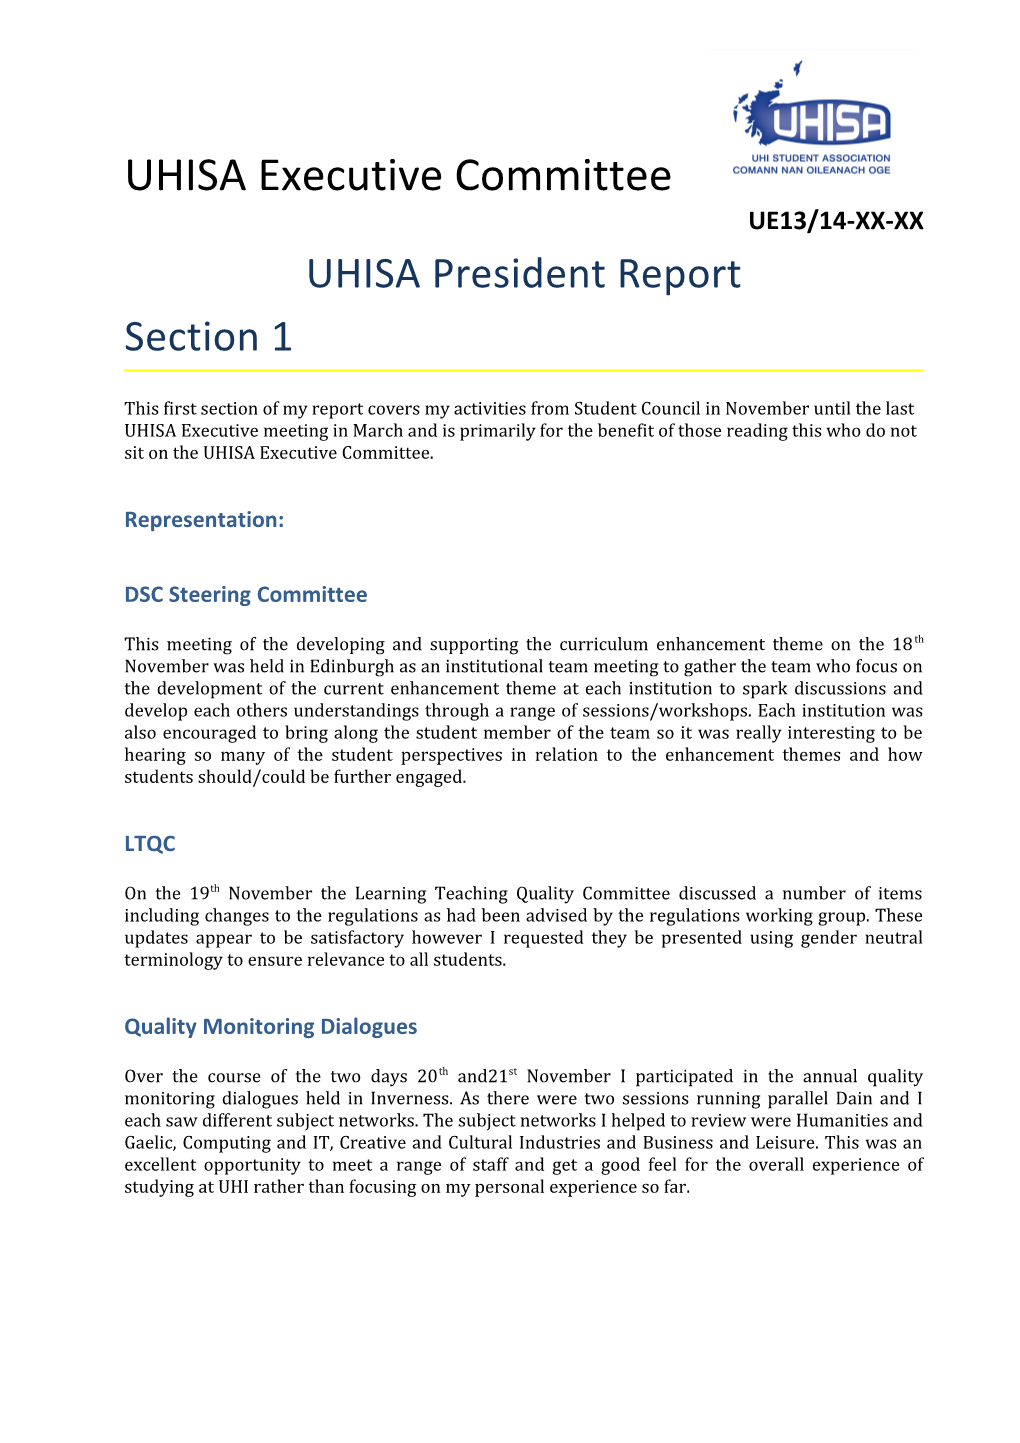 UHI Student Association Vice President Report